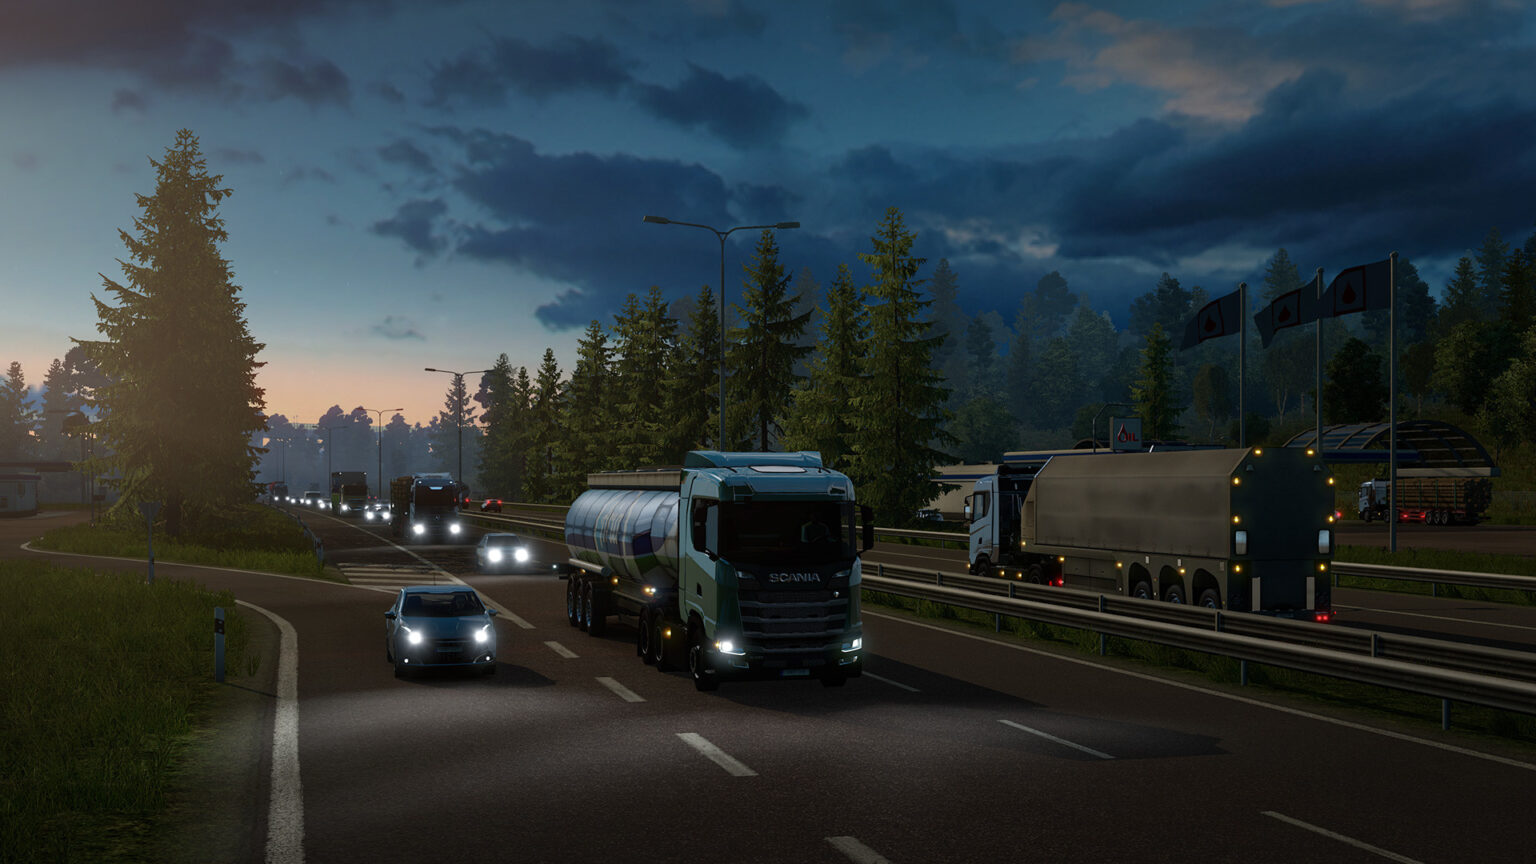 euro truck simulator 2 mac speed